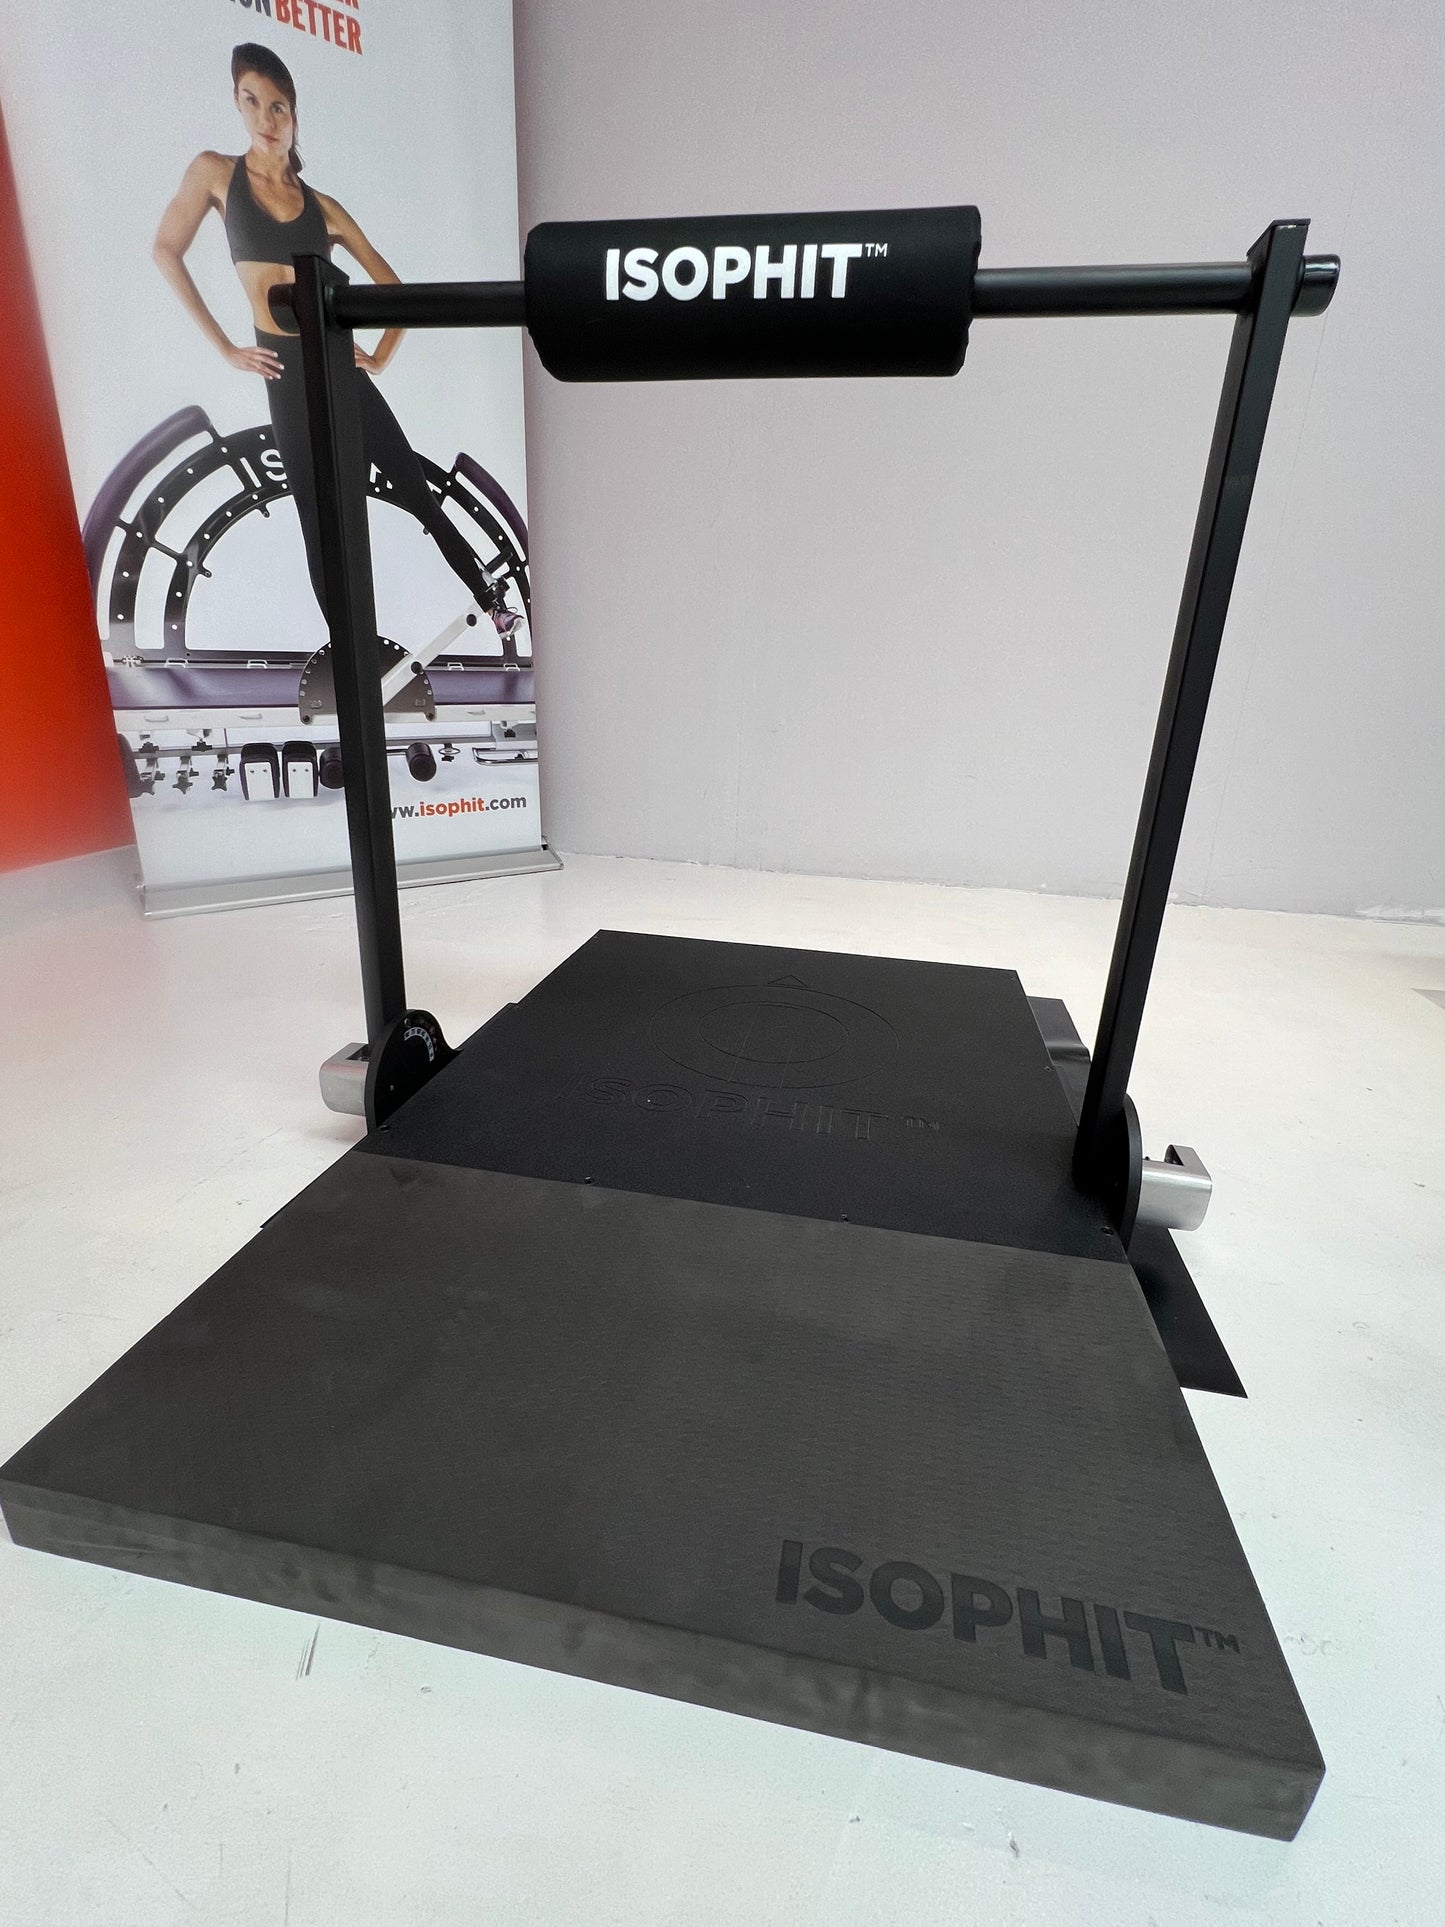 The Isophit Pad